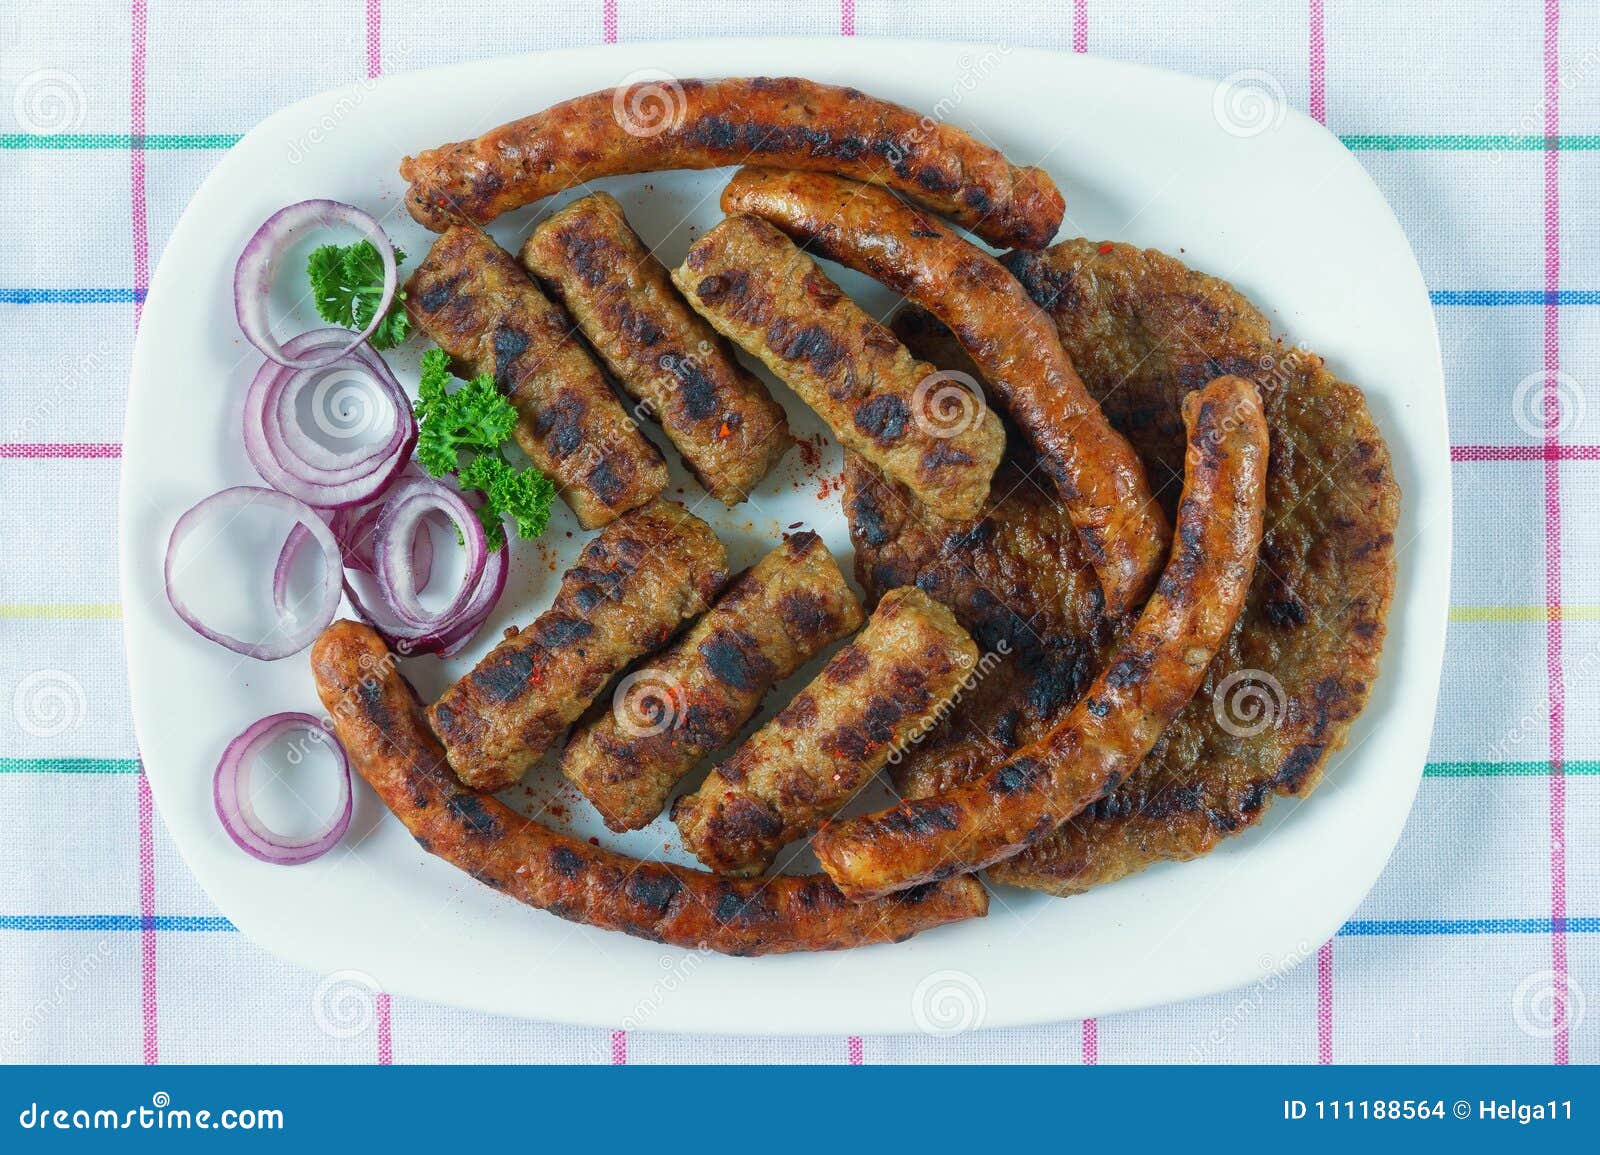 balkan cuisine. cevapi, kobasica and pljeskavica - grilled dish of minced meat. flat lay